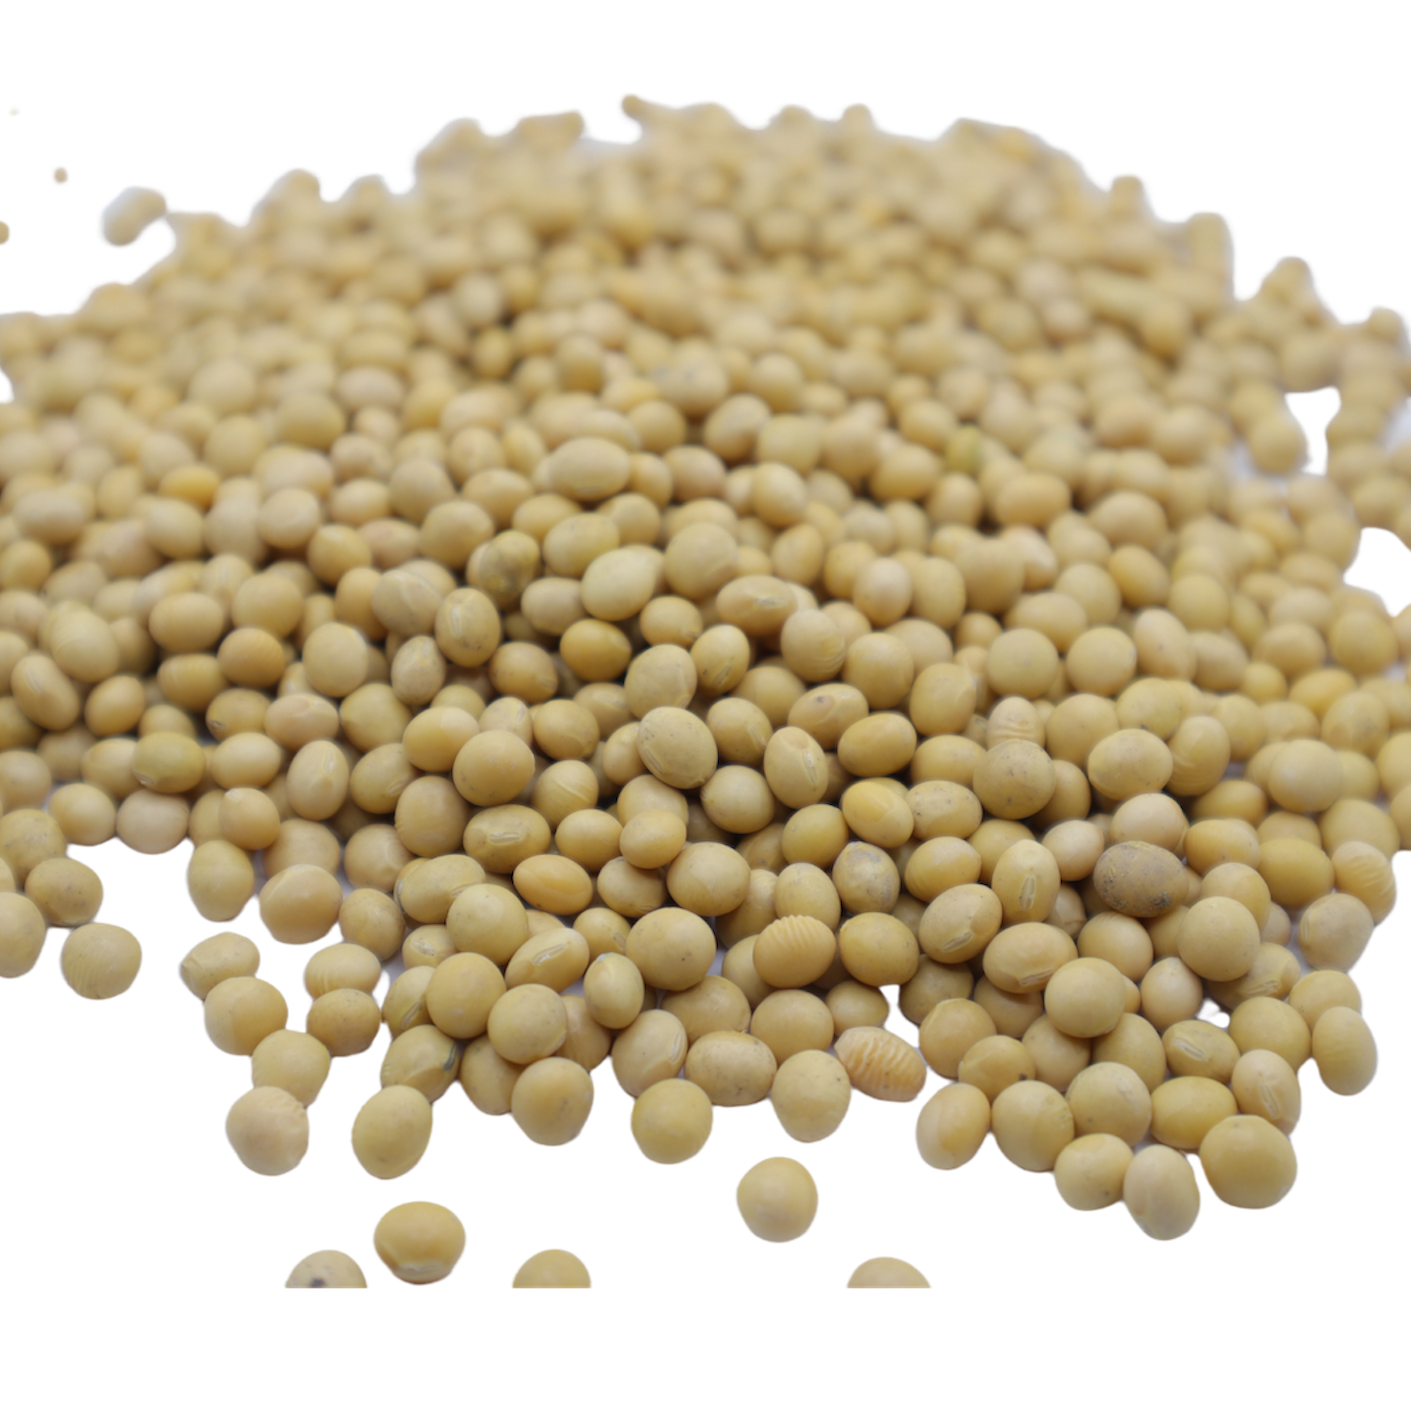 Soybeans 메주콩